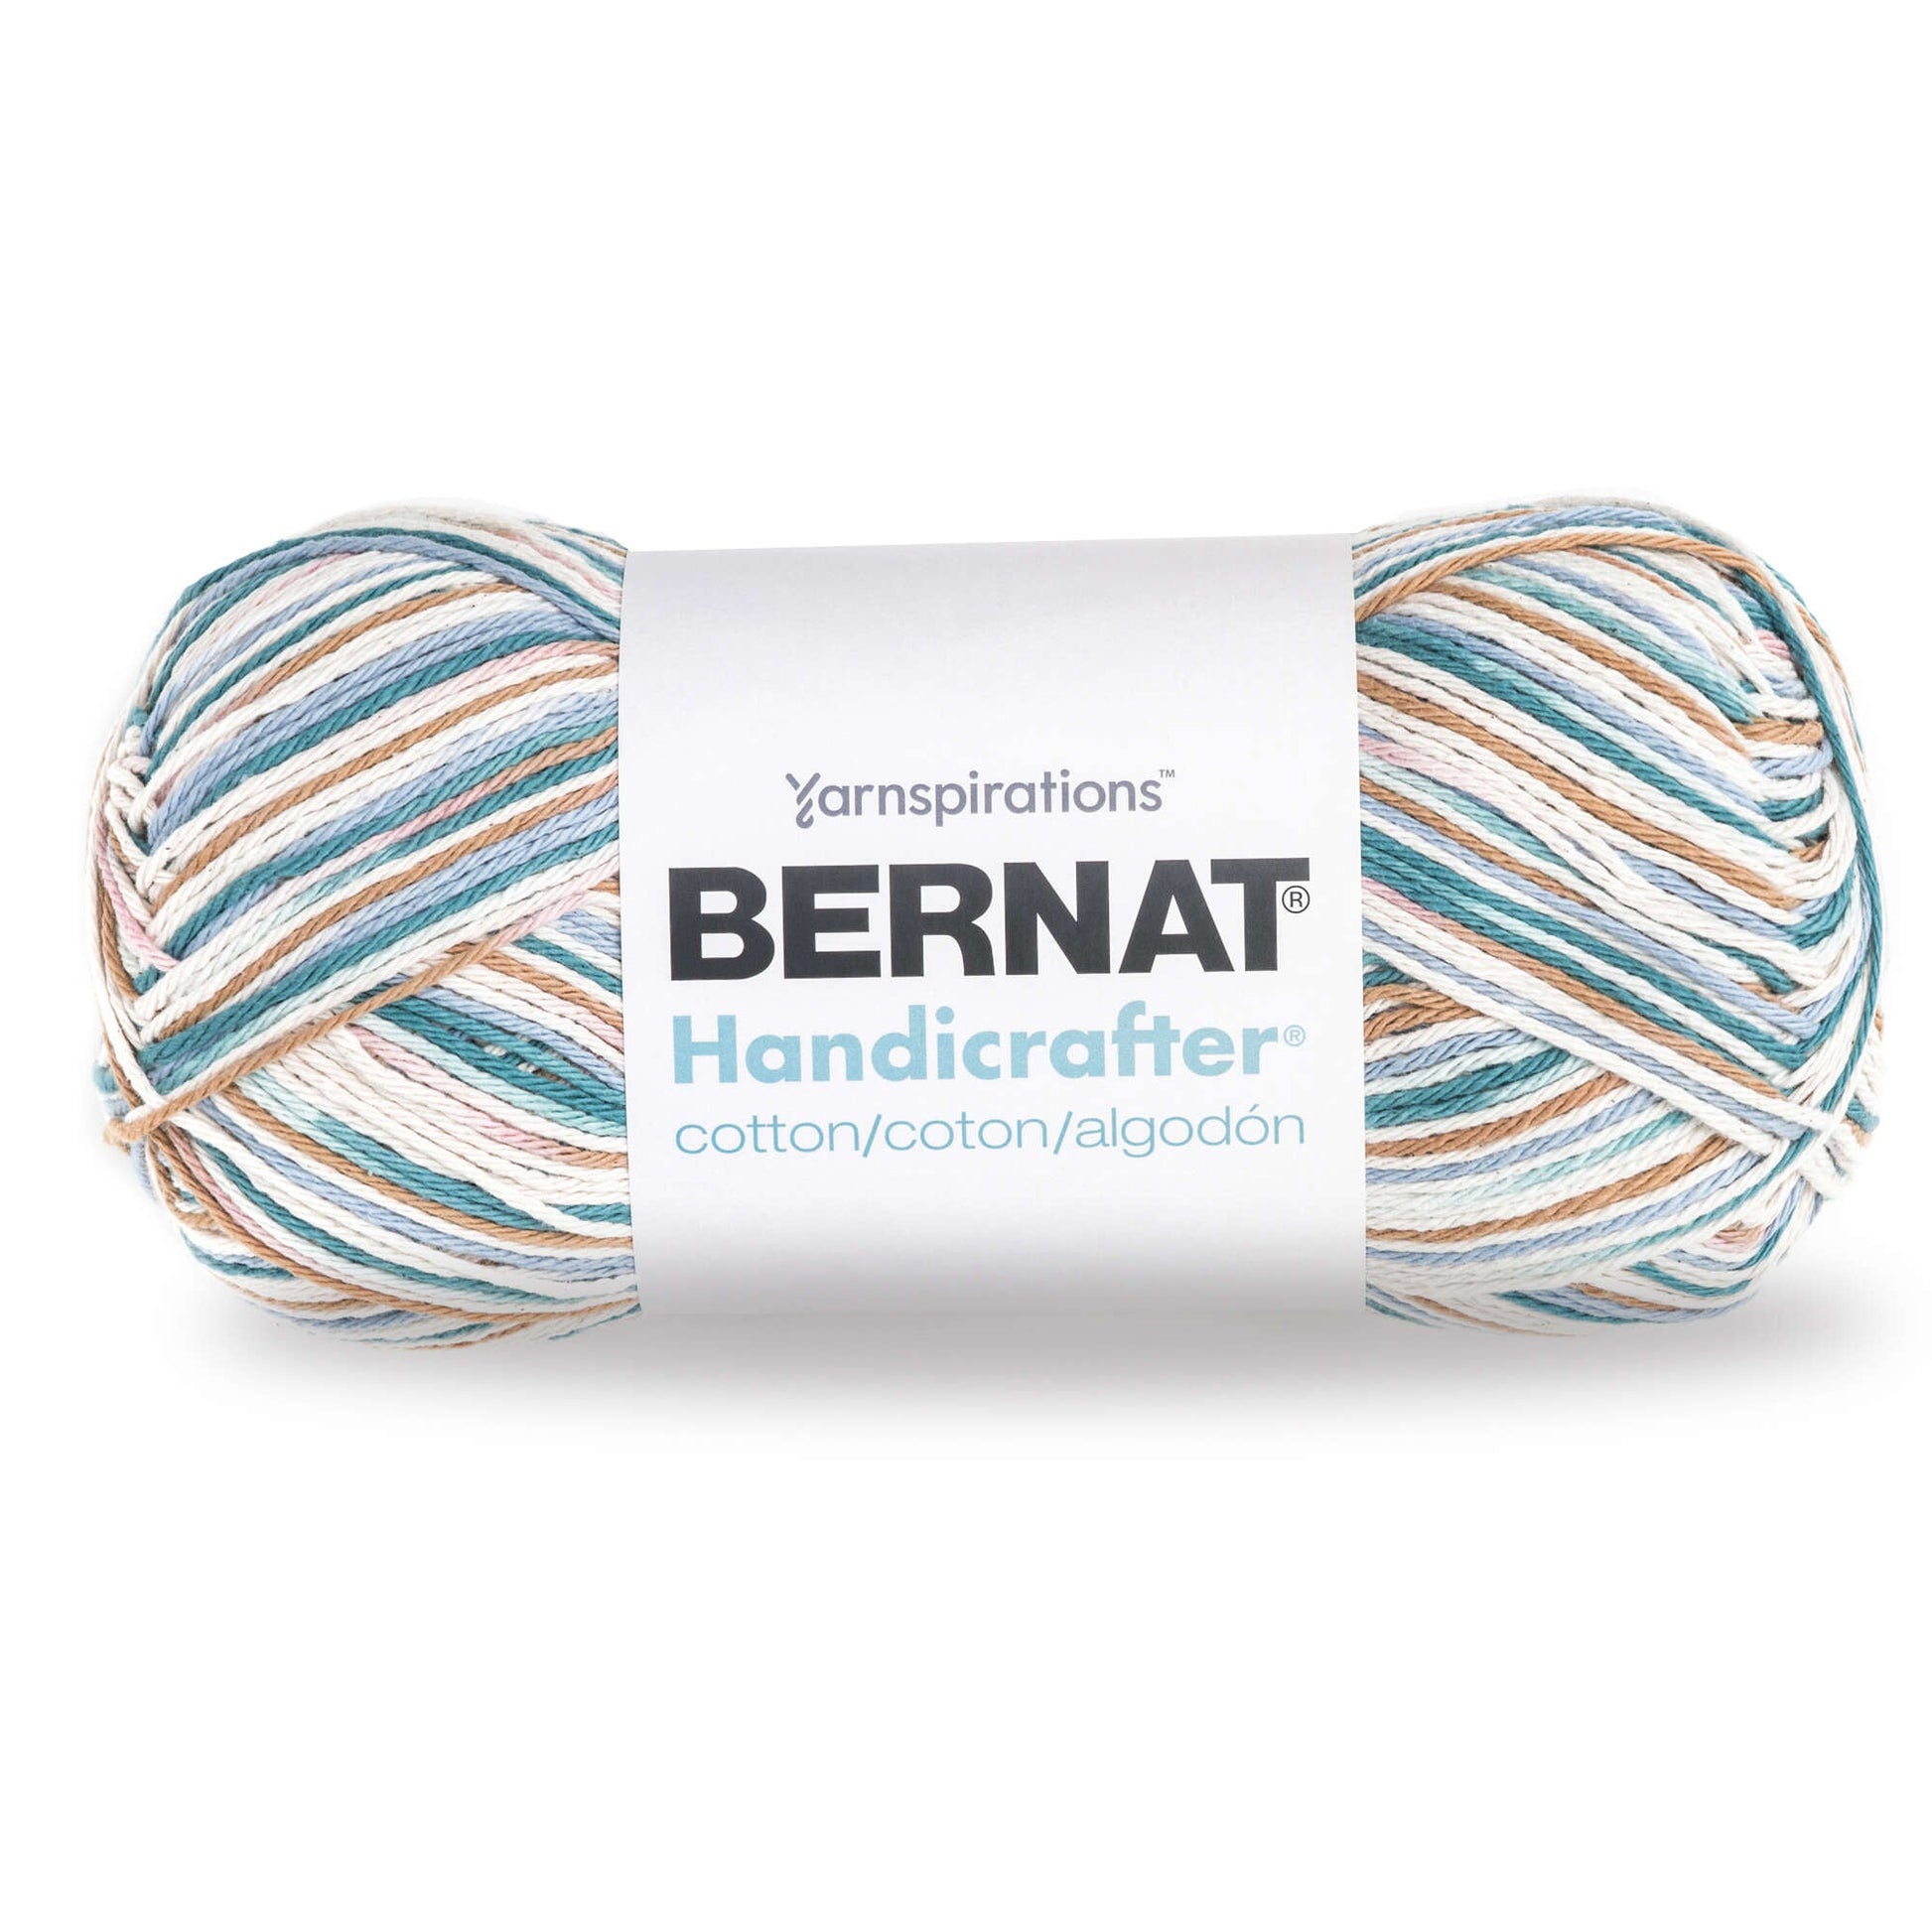 New Yarnspirations Bernat Handicrafter Cotton Yarn 12 oz 340g in Blue Camo